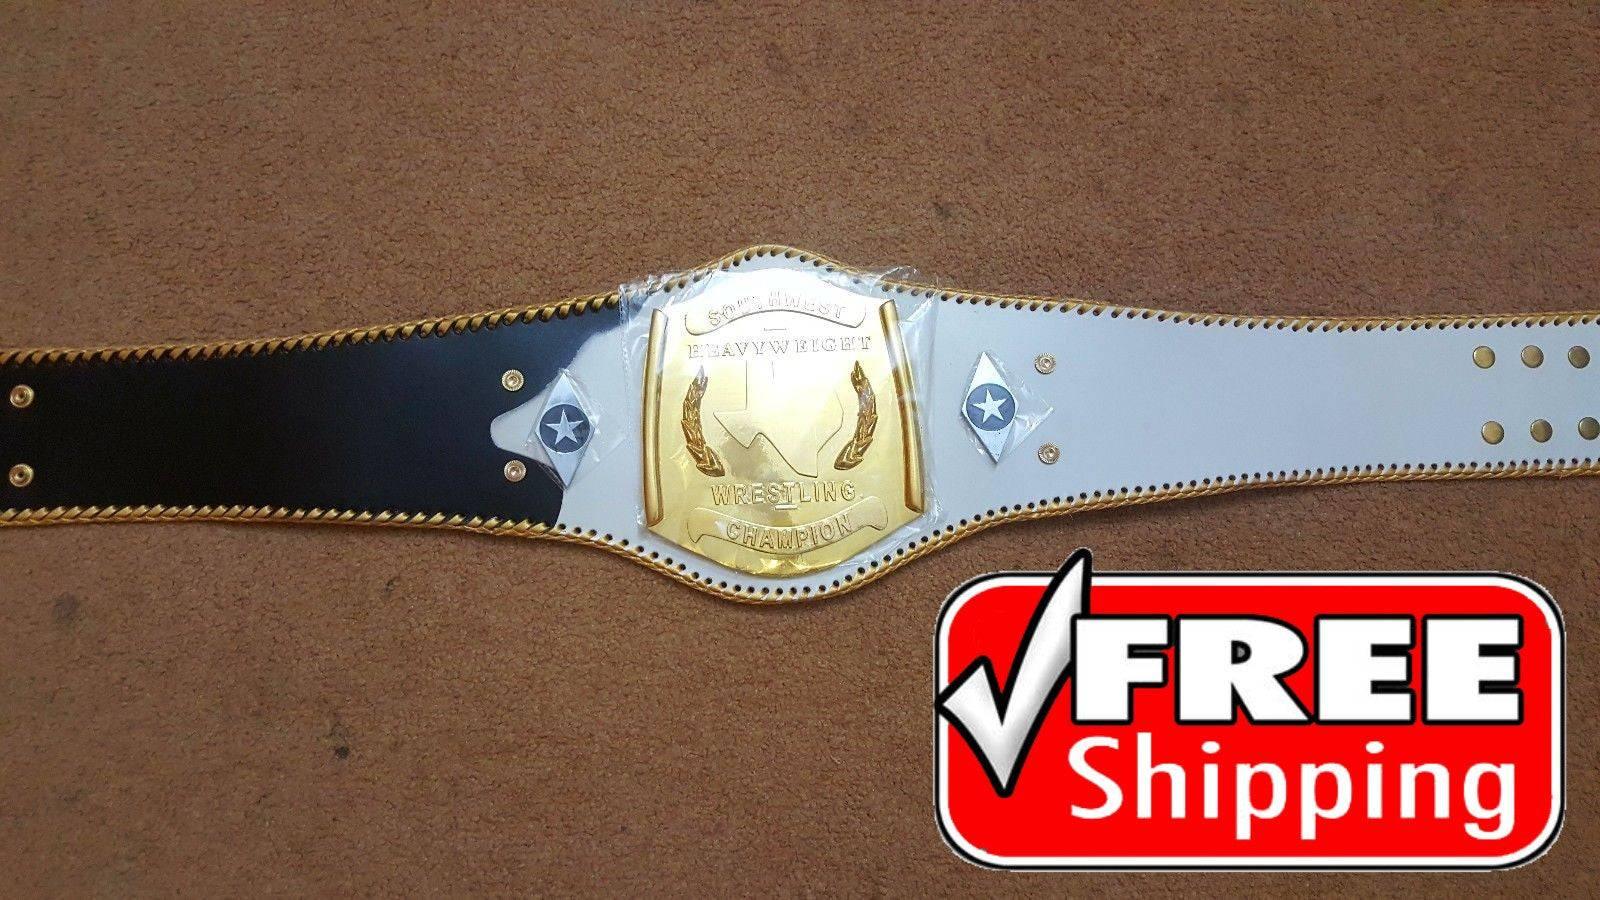 Southern Heavyweight Wrestling Championship Leather Belt